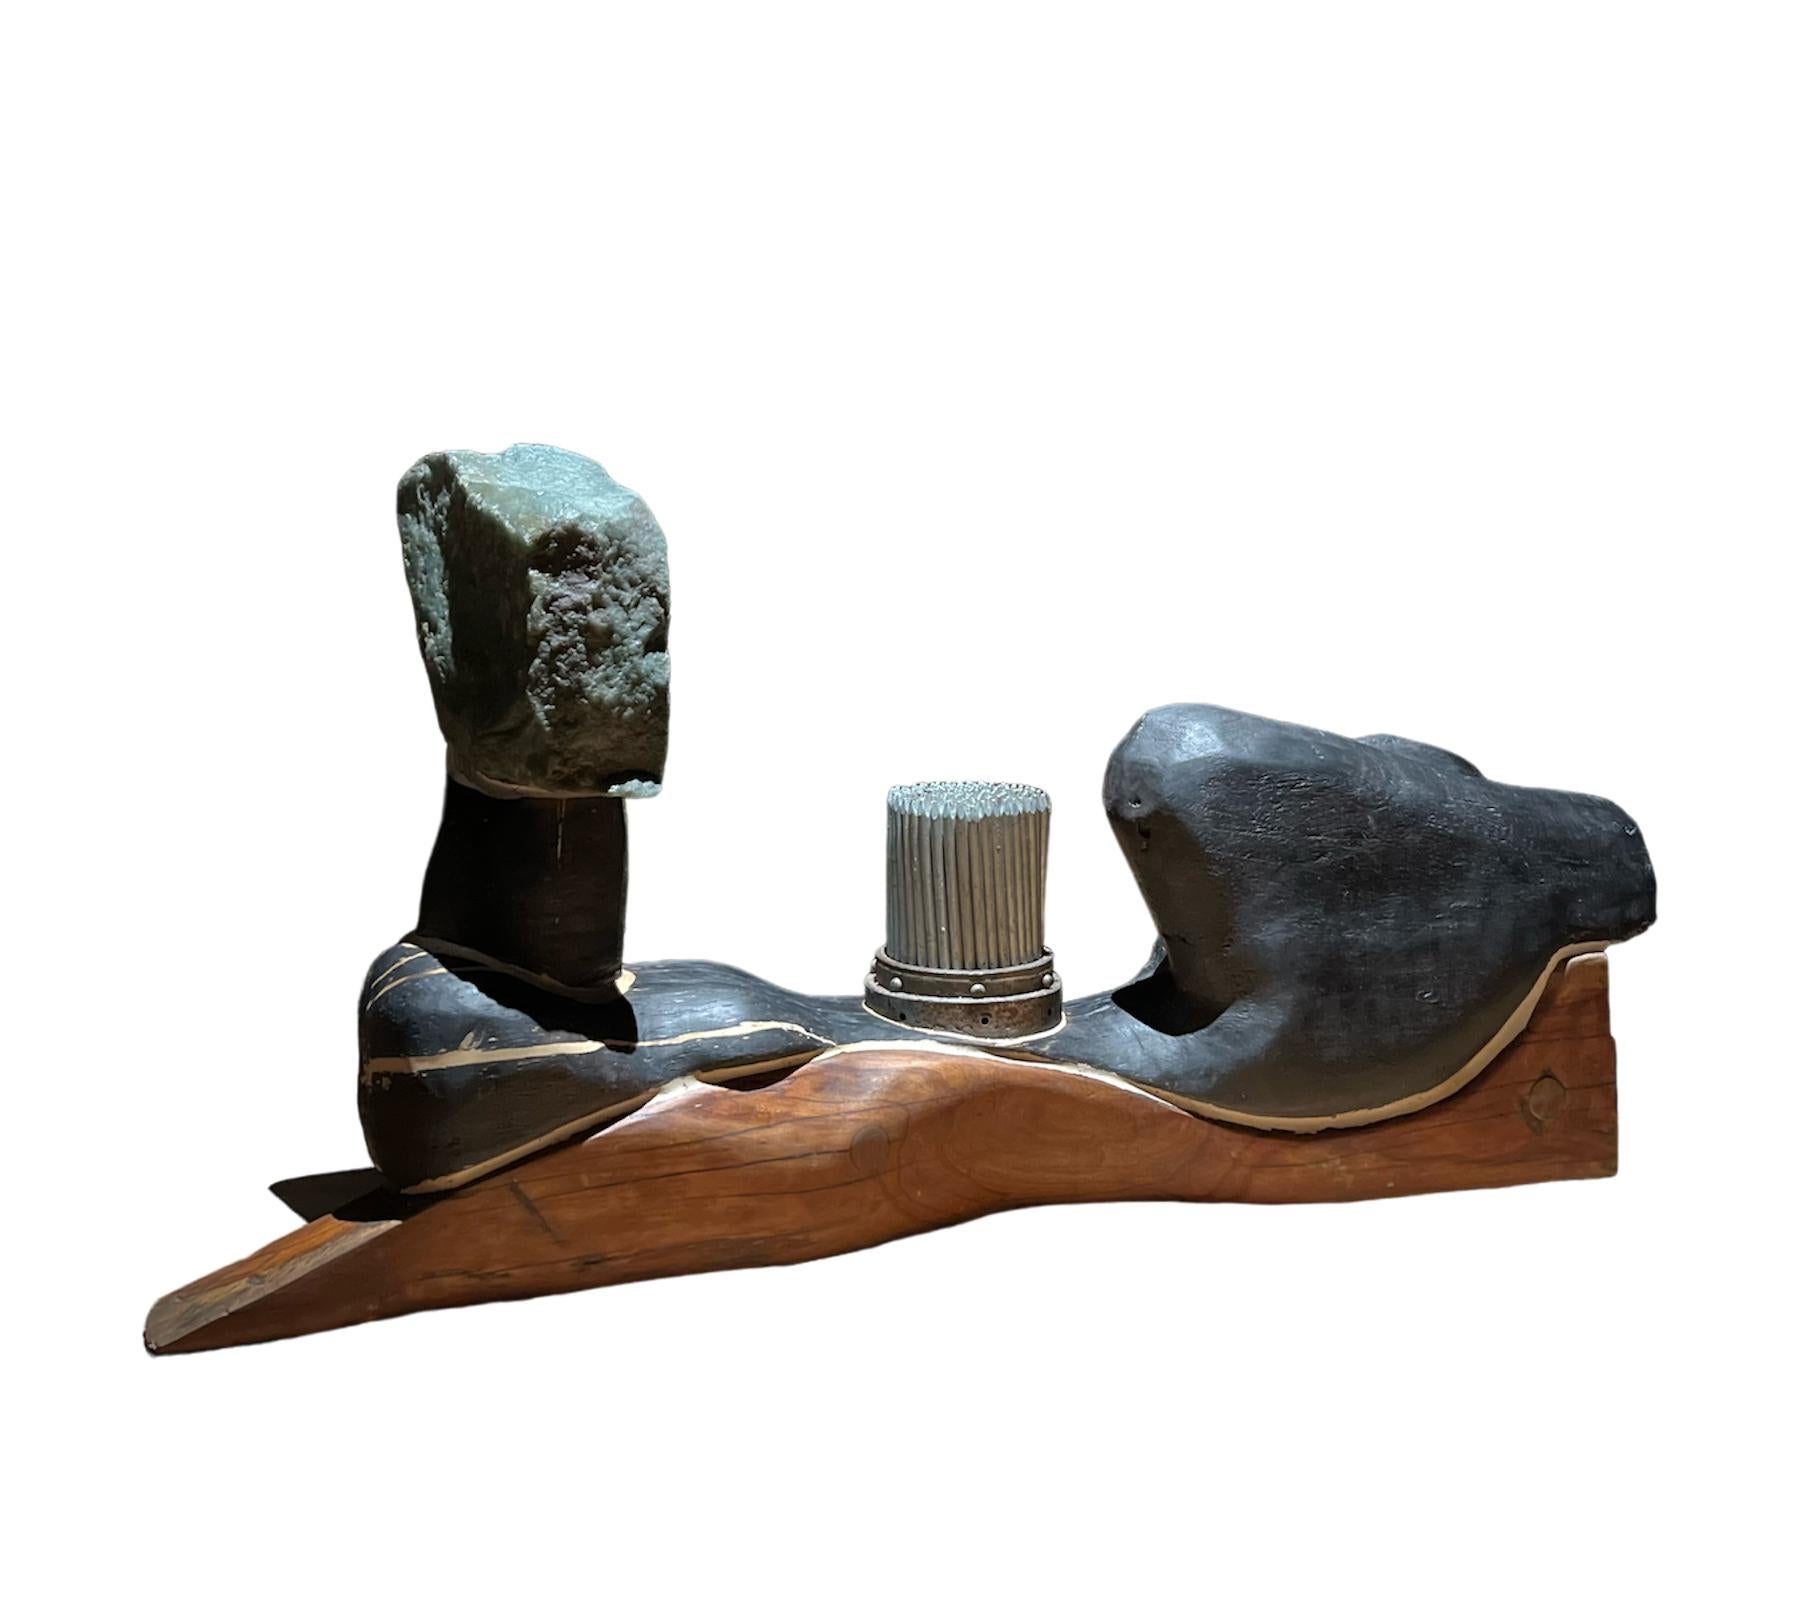 José Ignacio Suarez Solis Abstract Sculpture – Ori Guerreira na luz III, Figurative Skulptur. Skulpturen aus der Serie Skulpturen